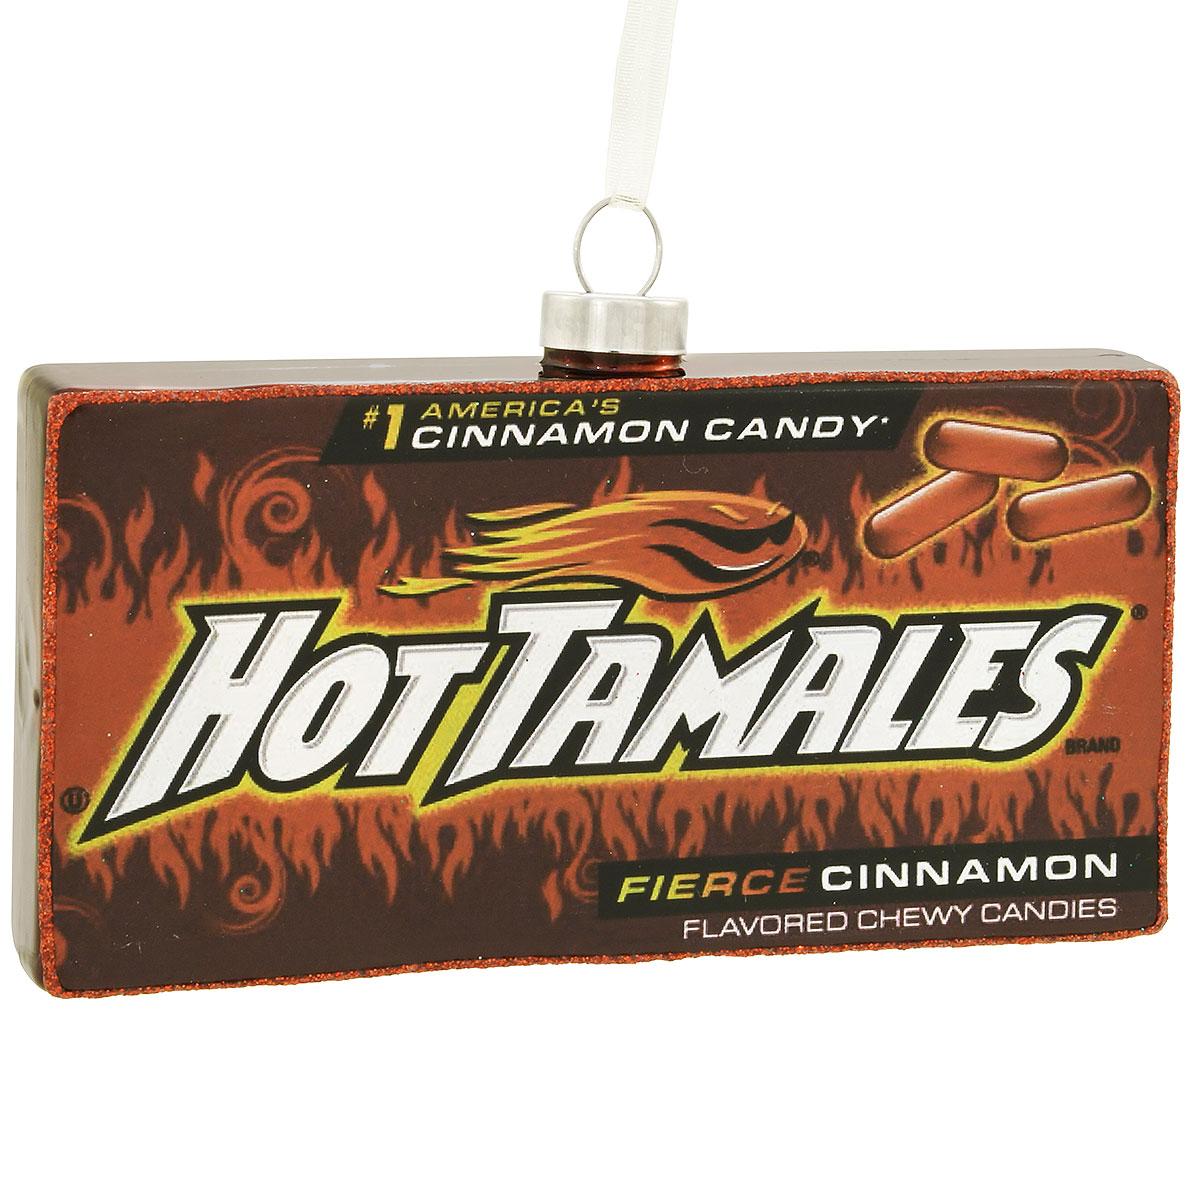 Hot Tamales Fierce Cinnamon Chewy Candies Box Glass Ornament